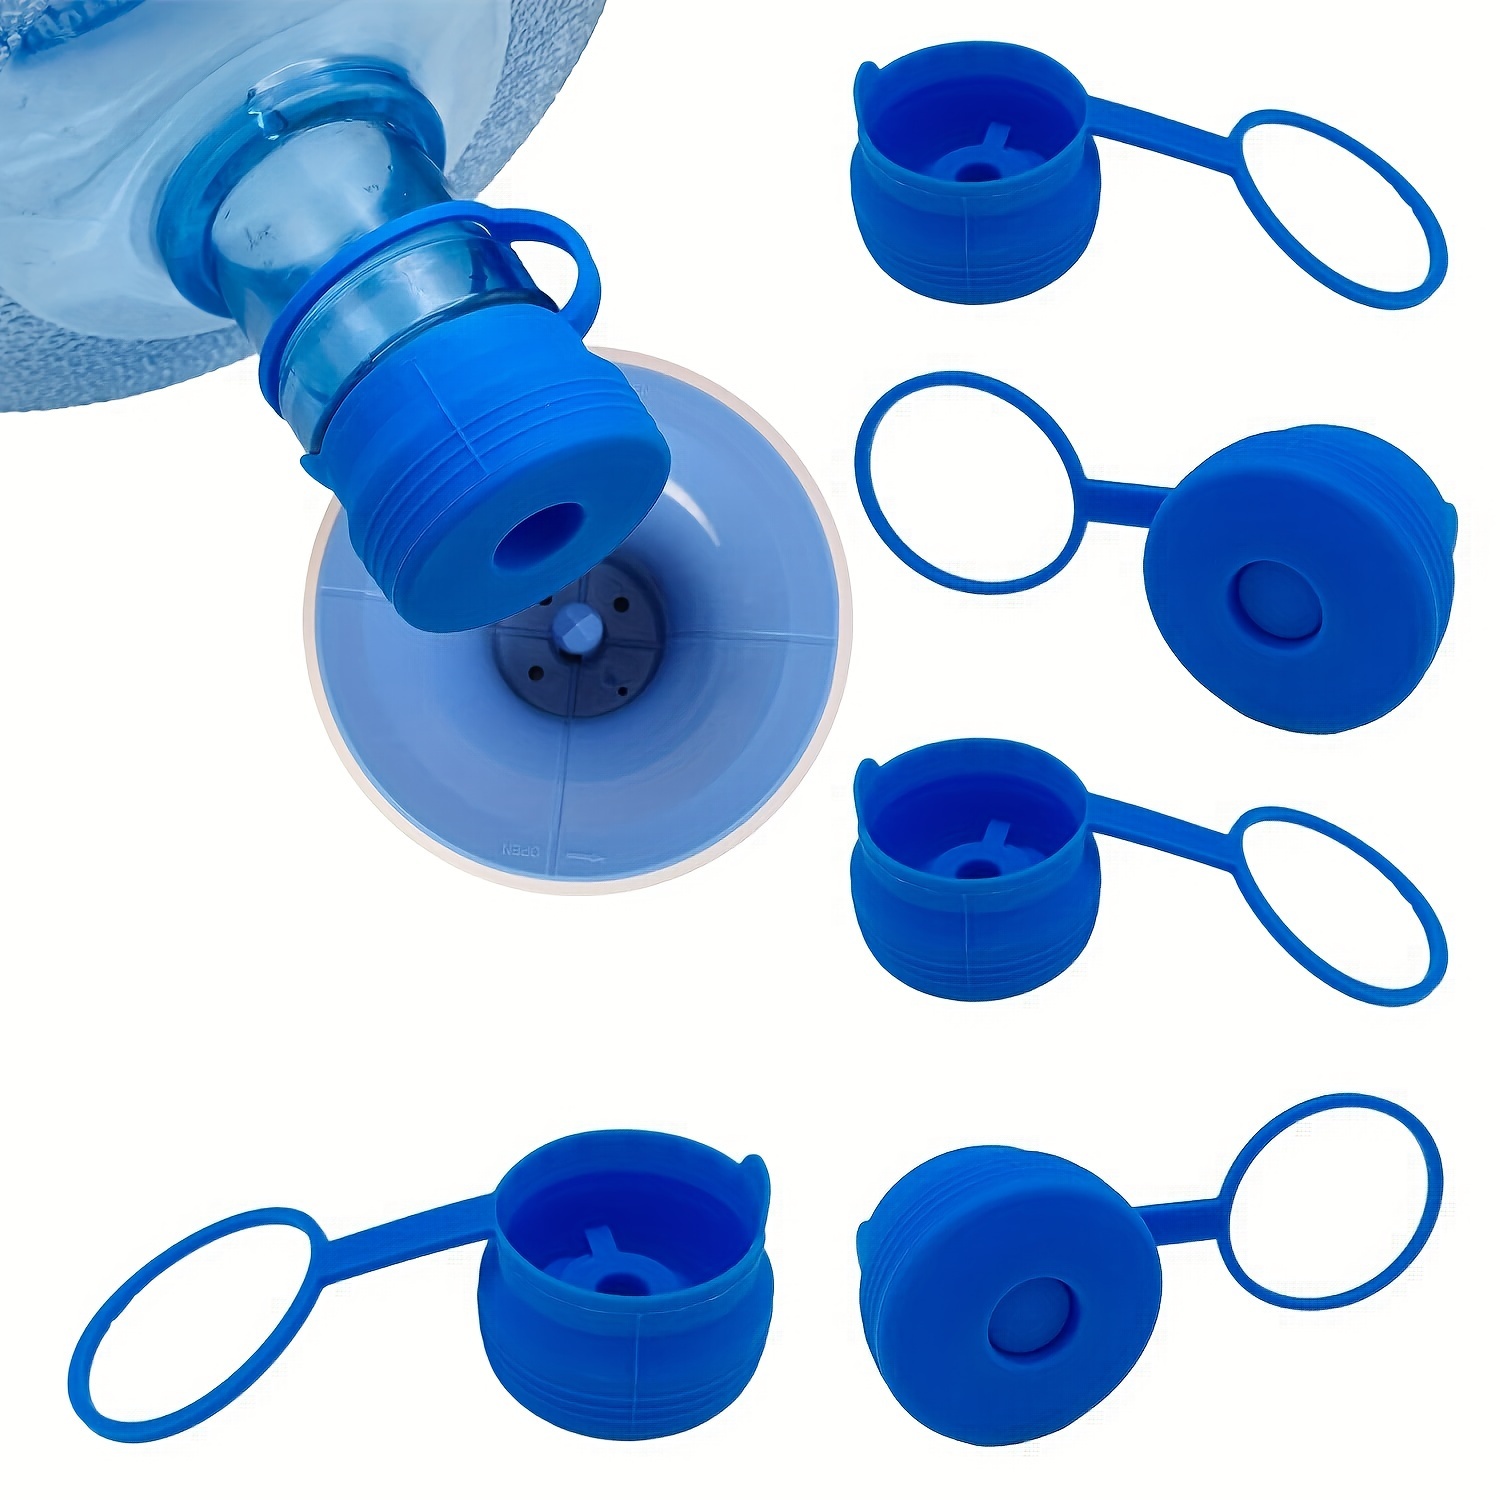  Giichen No Spill Water Bottle Caps - BPA Free